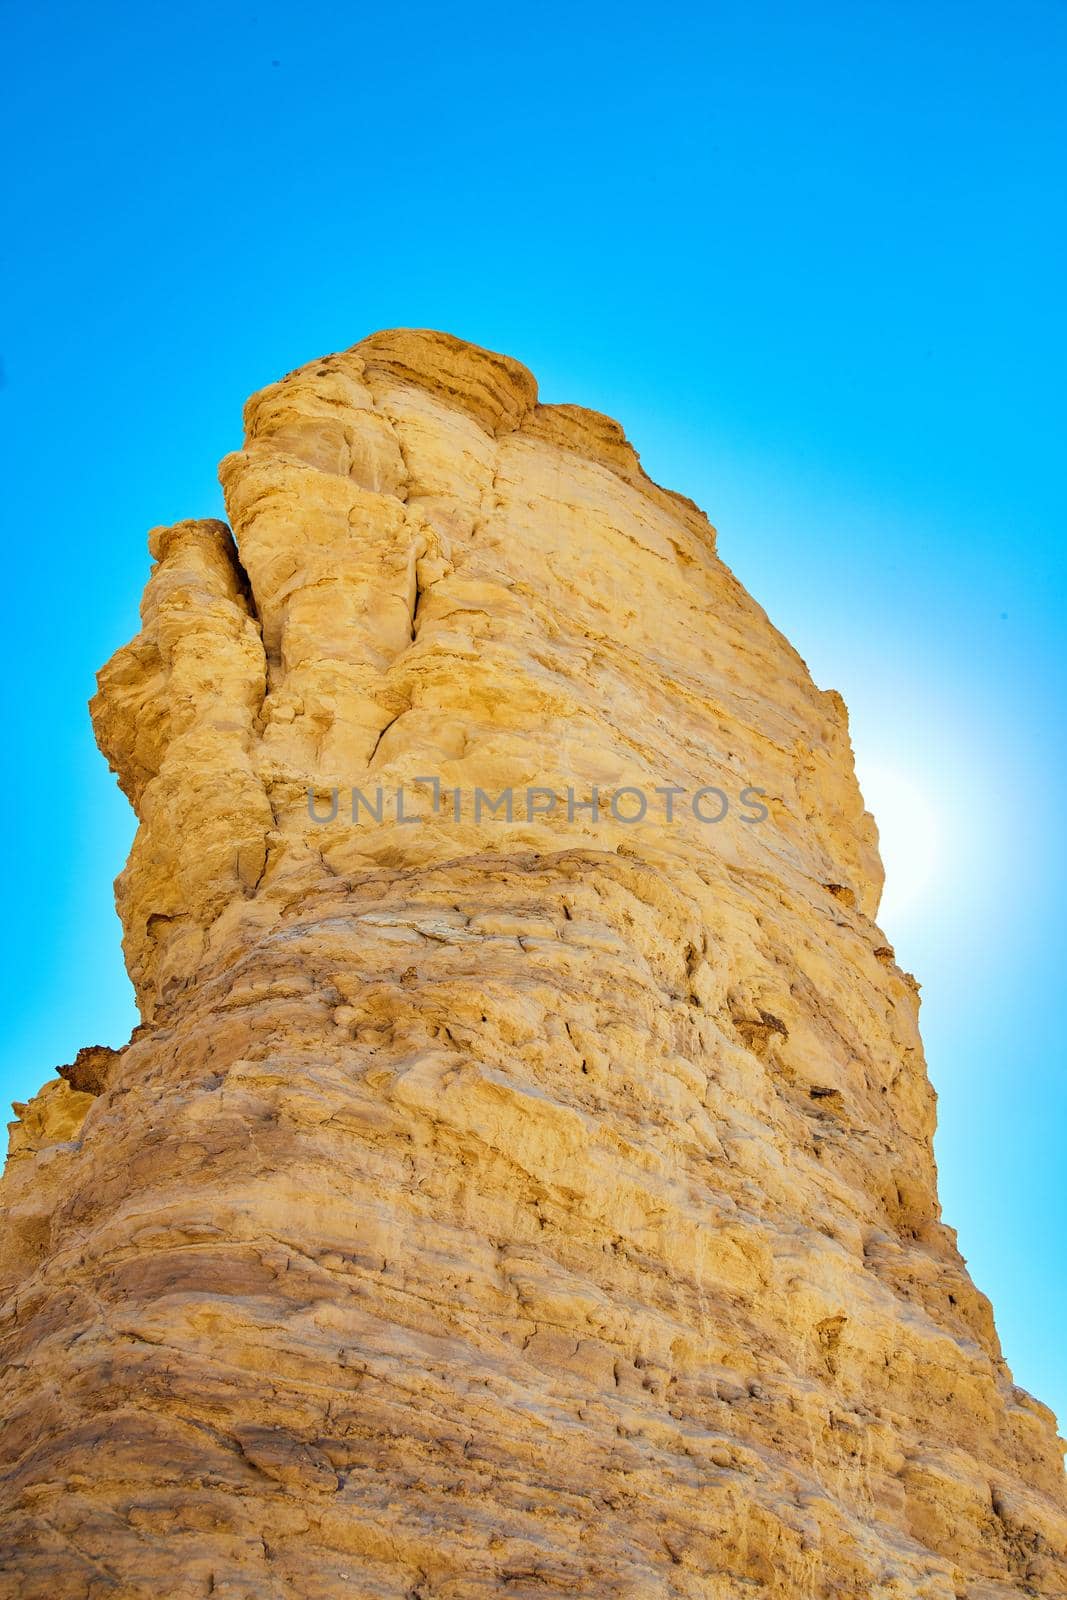 Image of Pillar of white stone blocking sun with vibrant blue sky